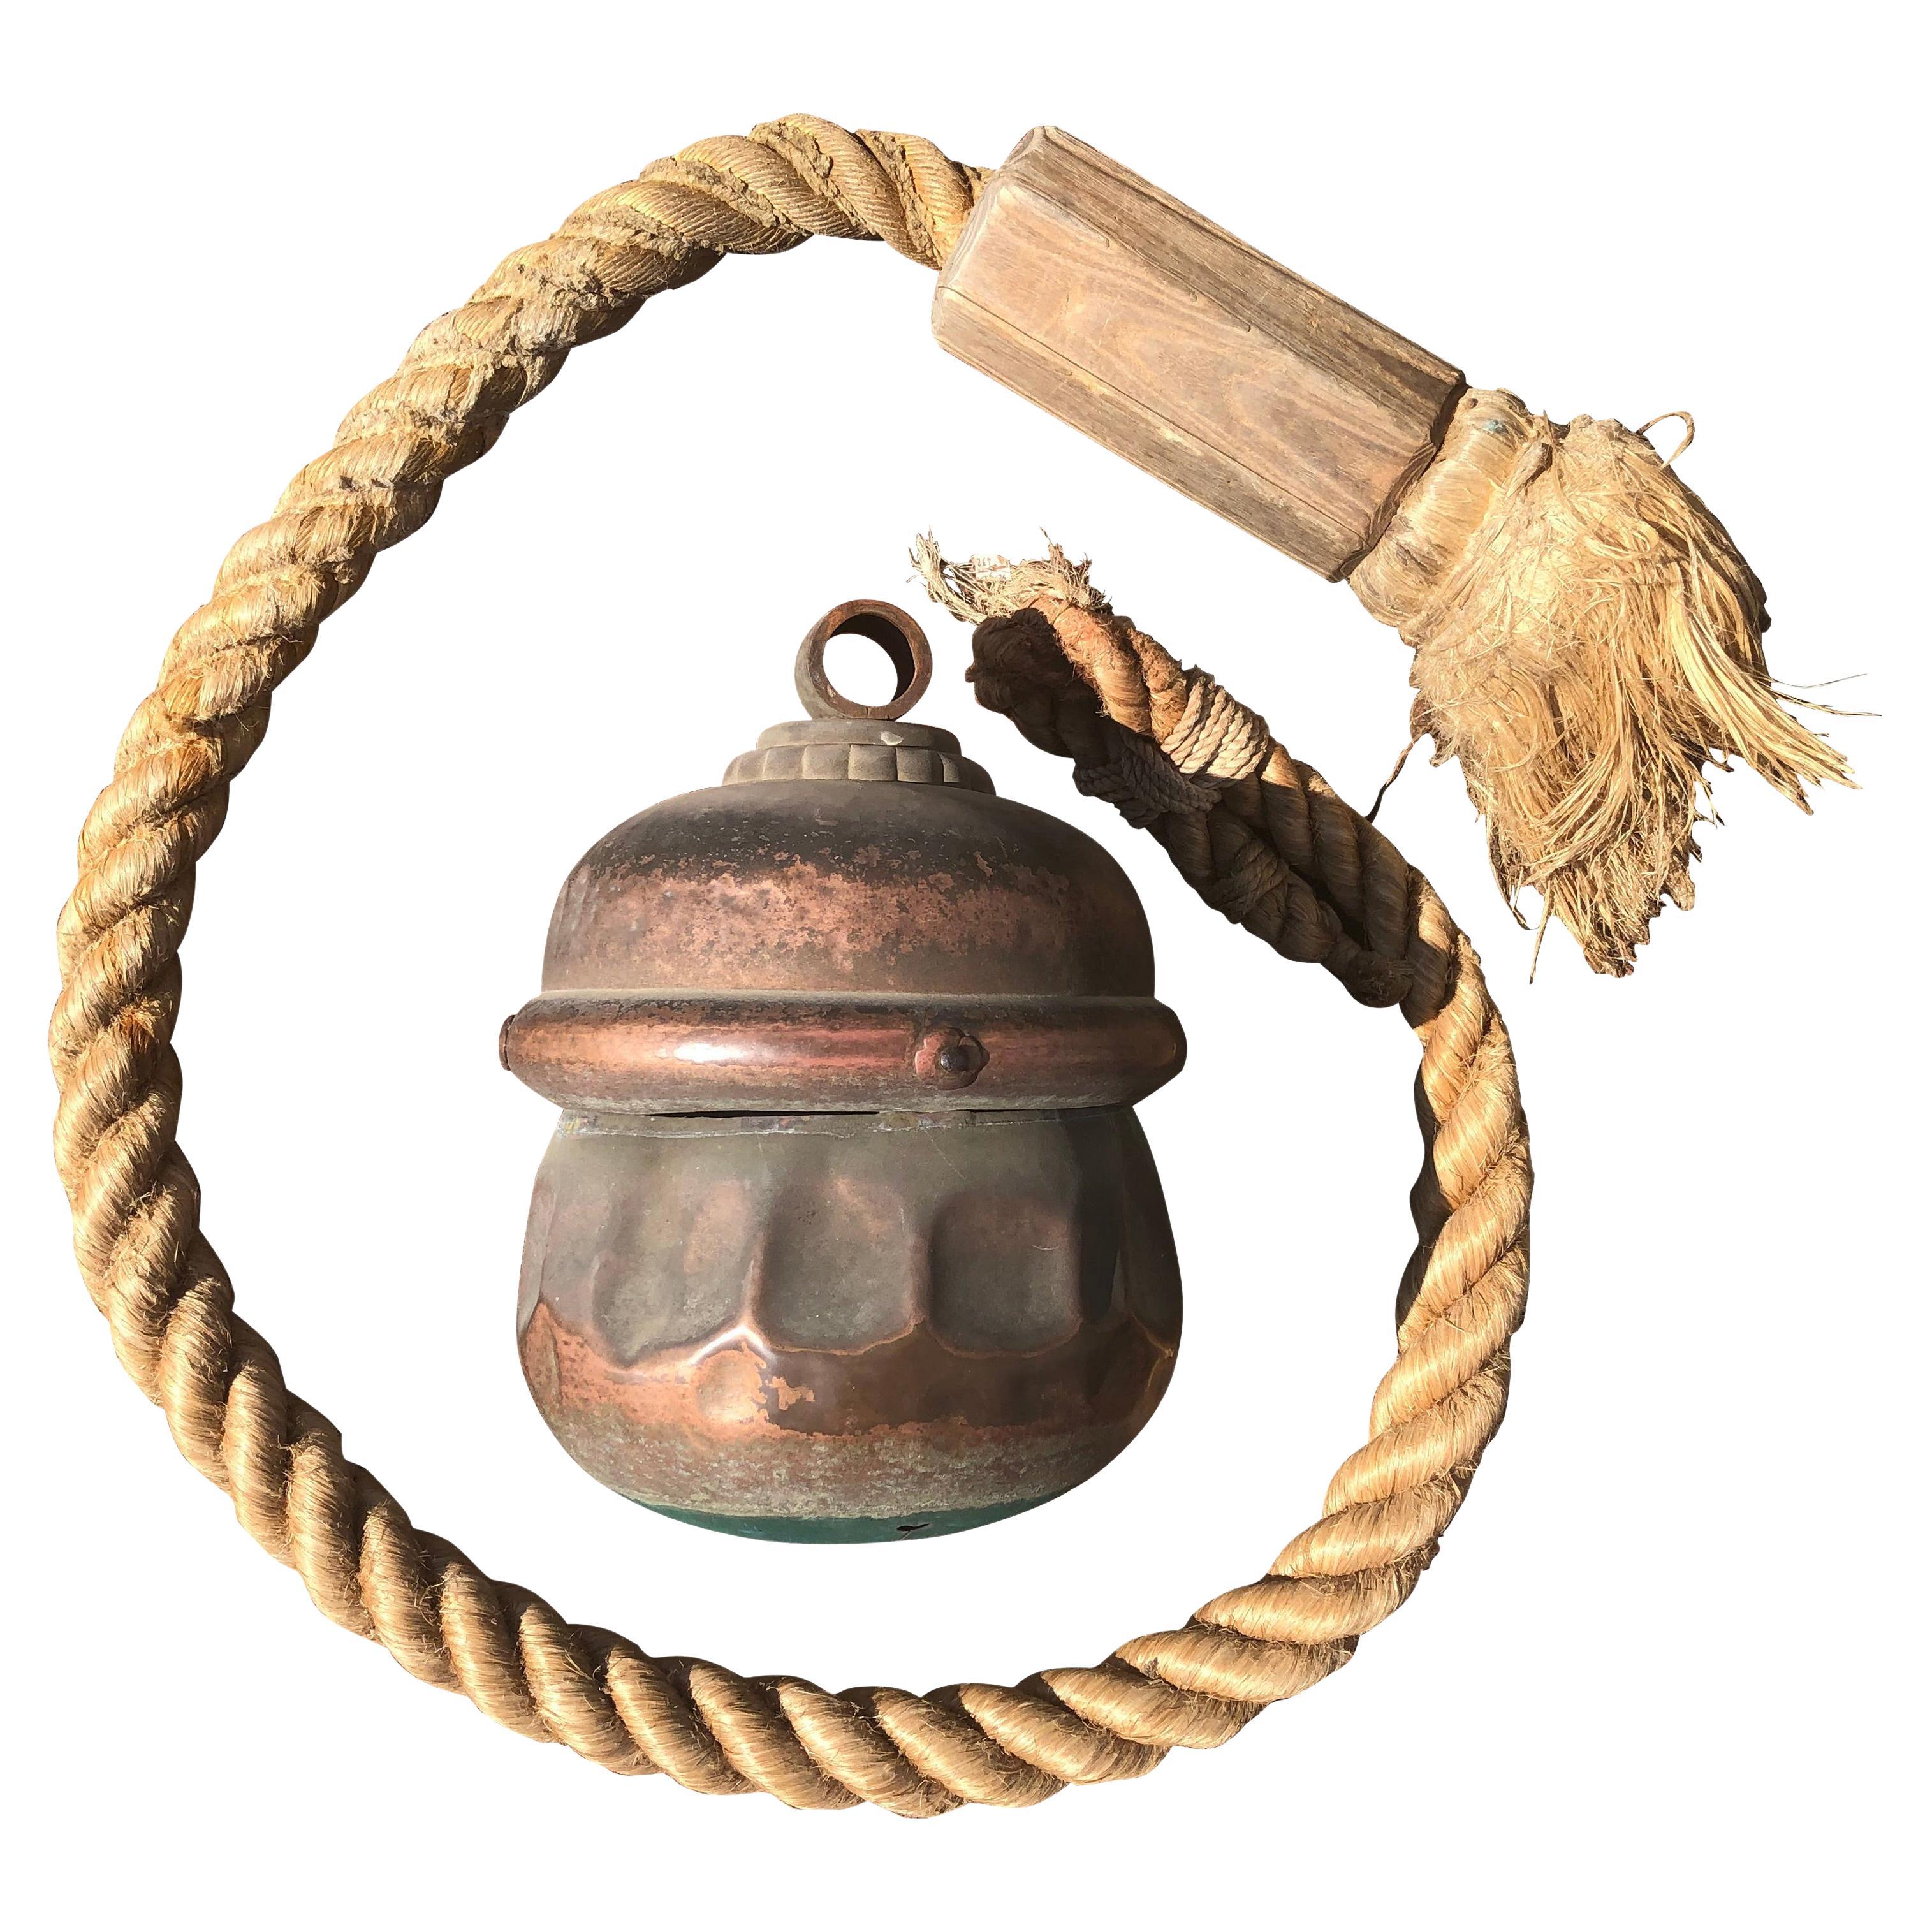 Set of 3 Rustic Decorative Hanging Bells, Adjustable String, Wood Clapper